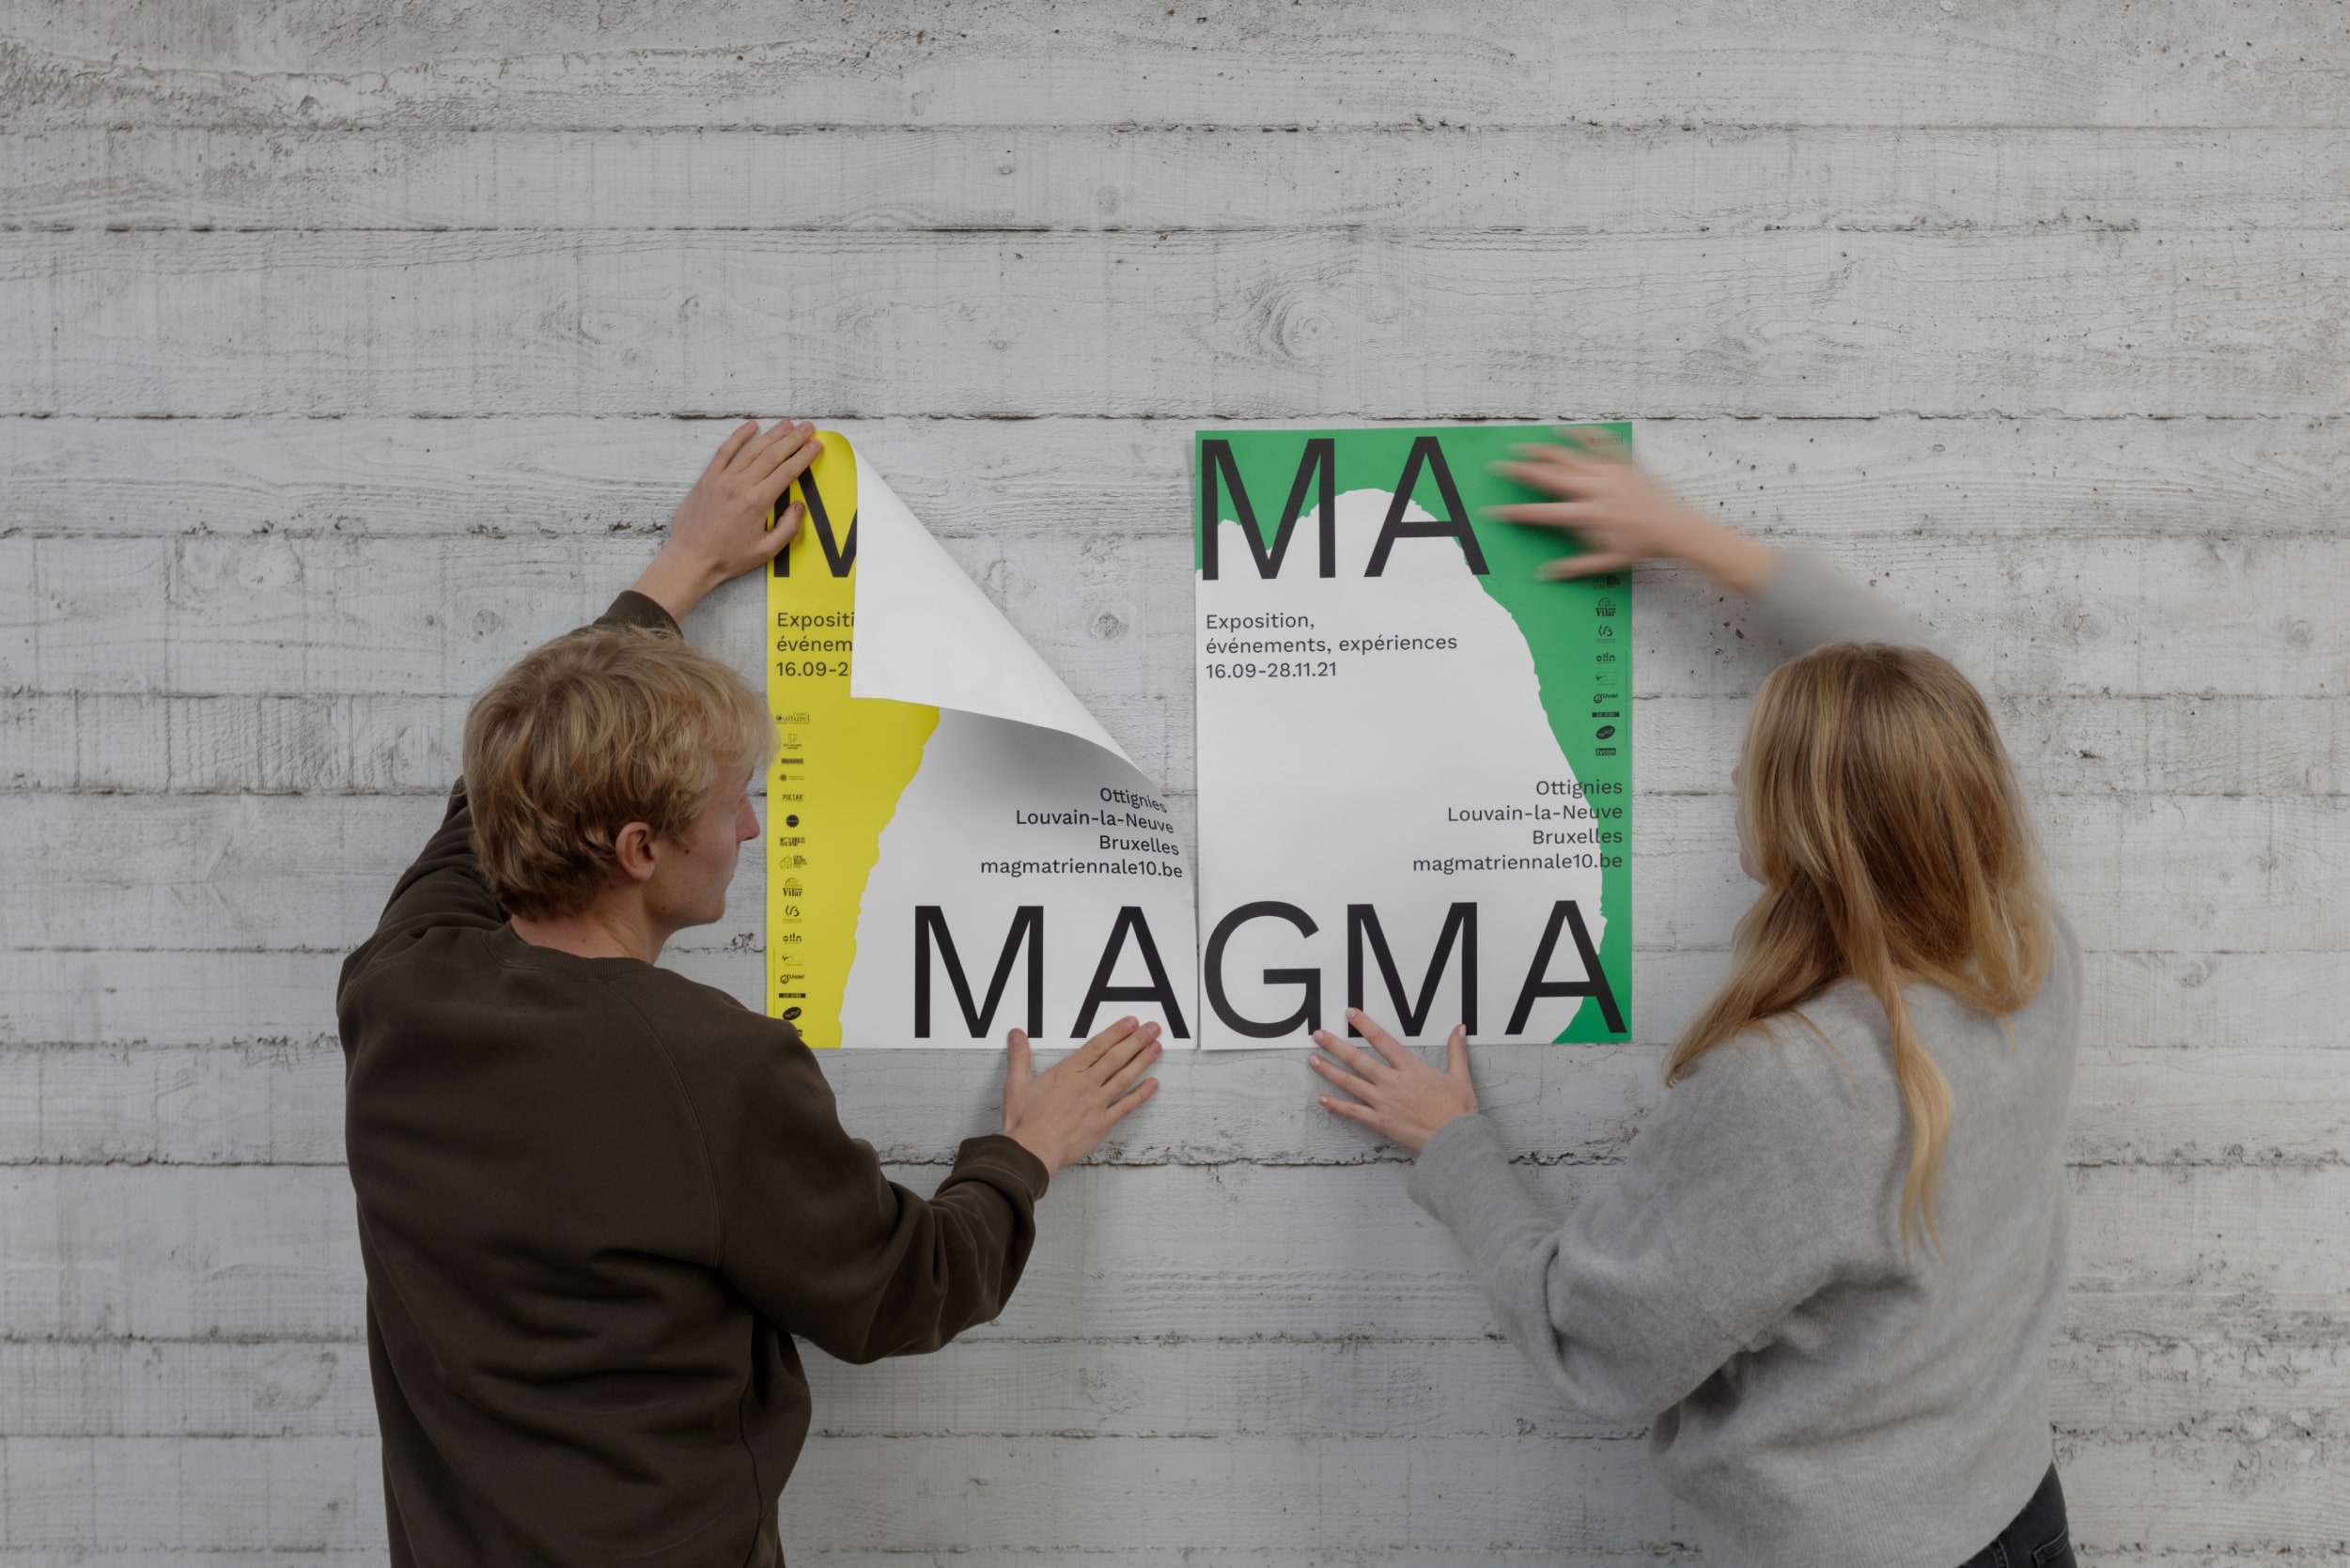 Case: Magma